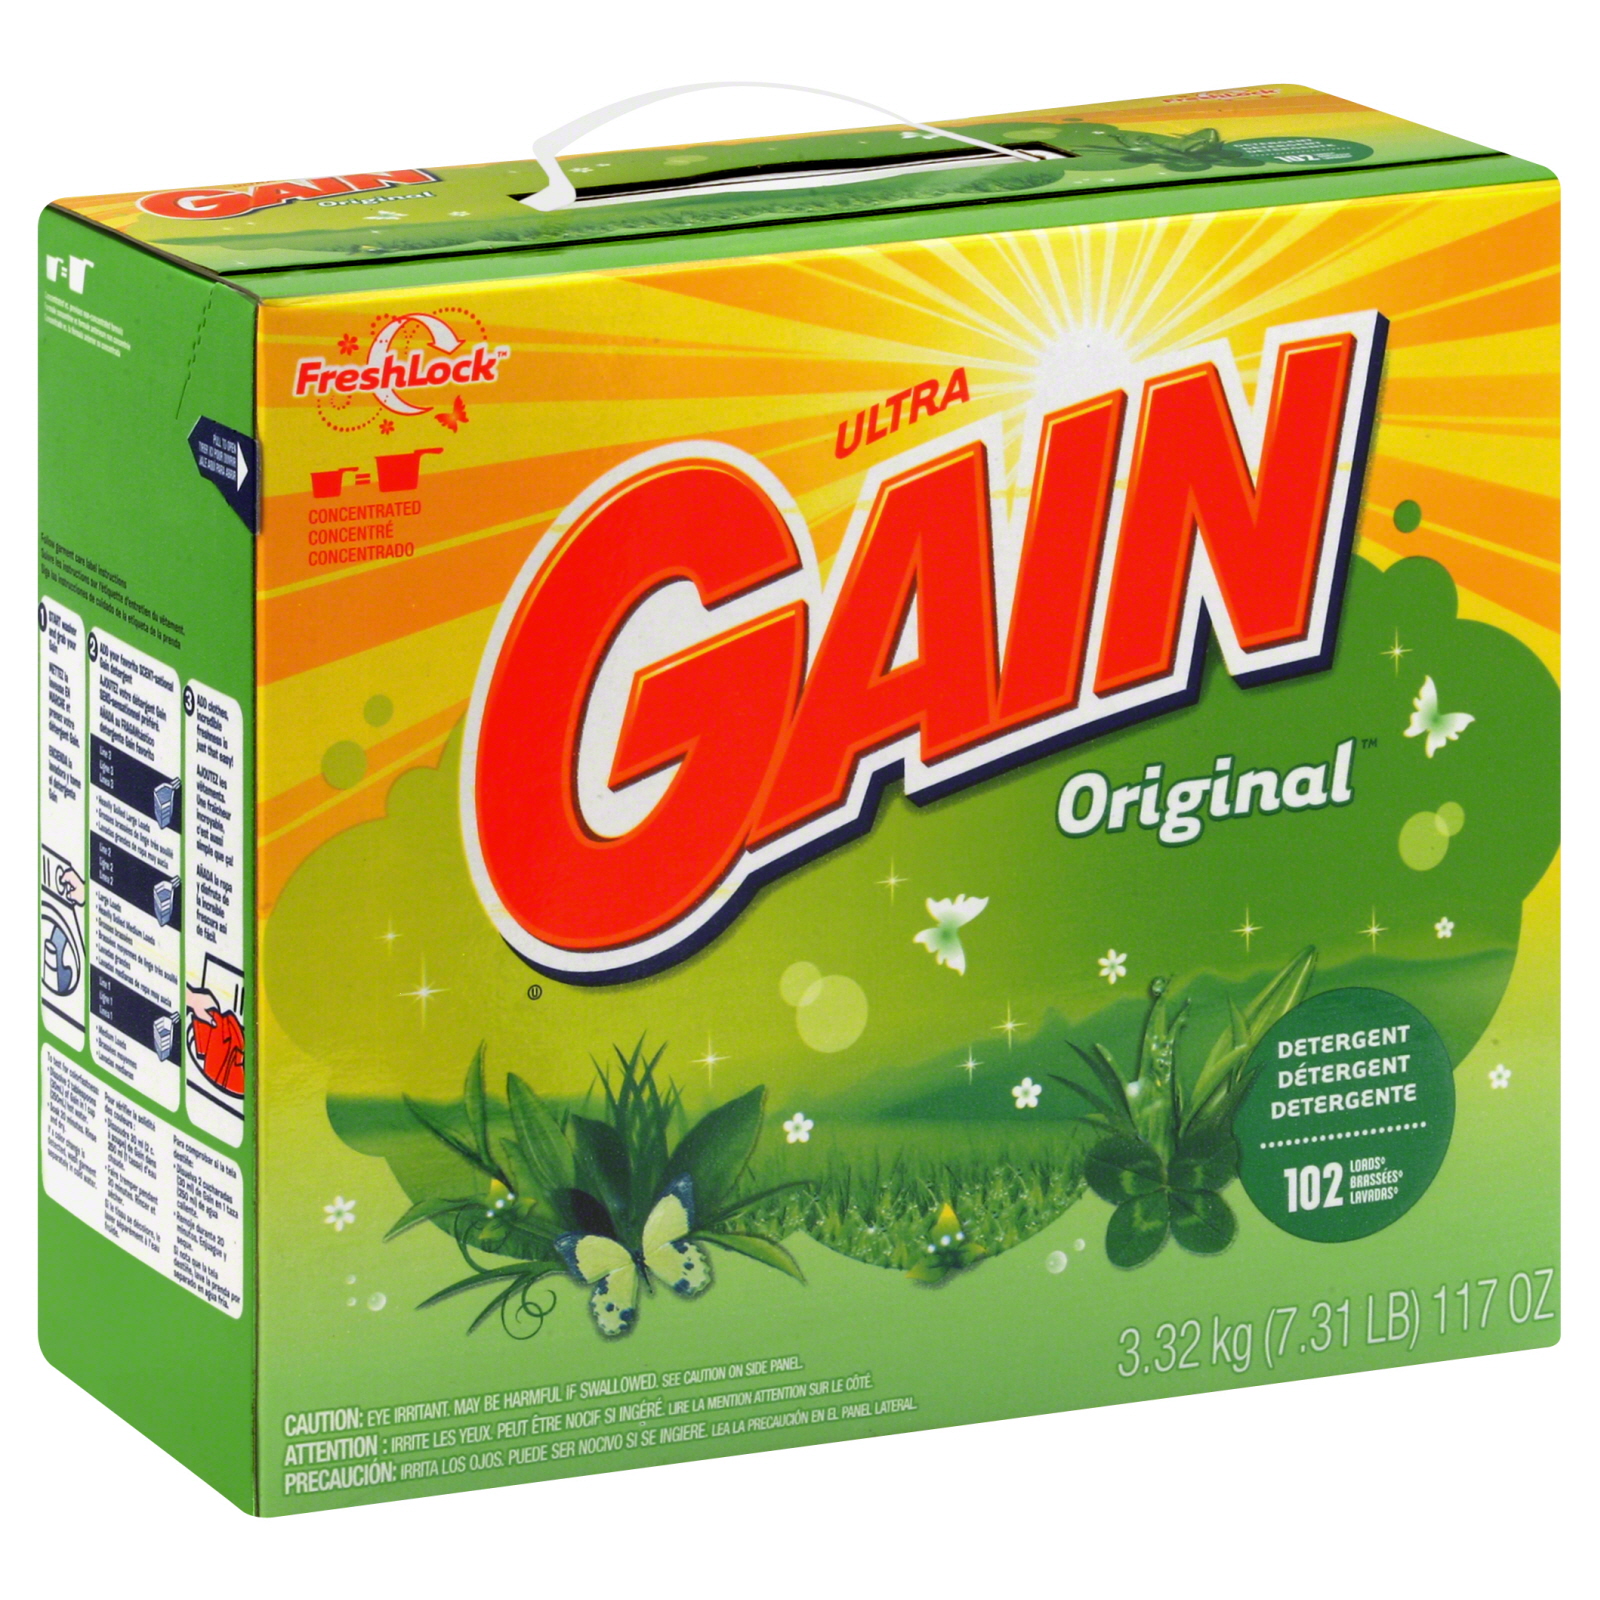 Gain Ultra Laundry Powder Detergent, Original, 102 loads, 117 oz